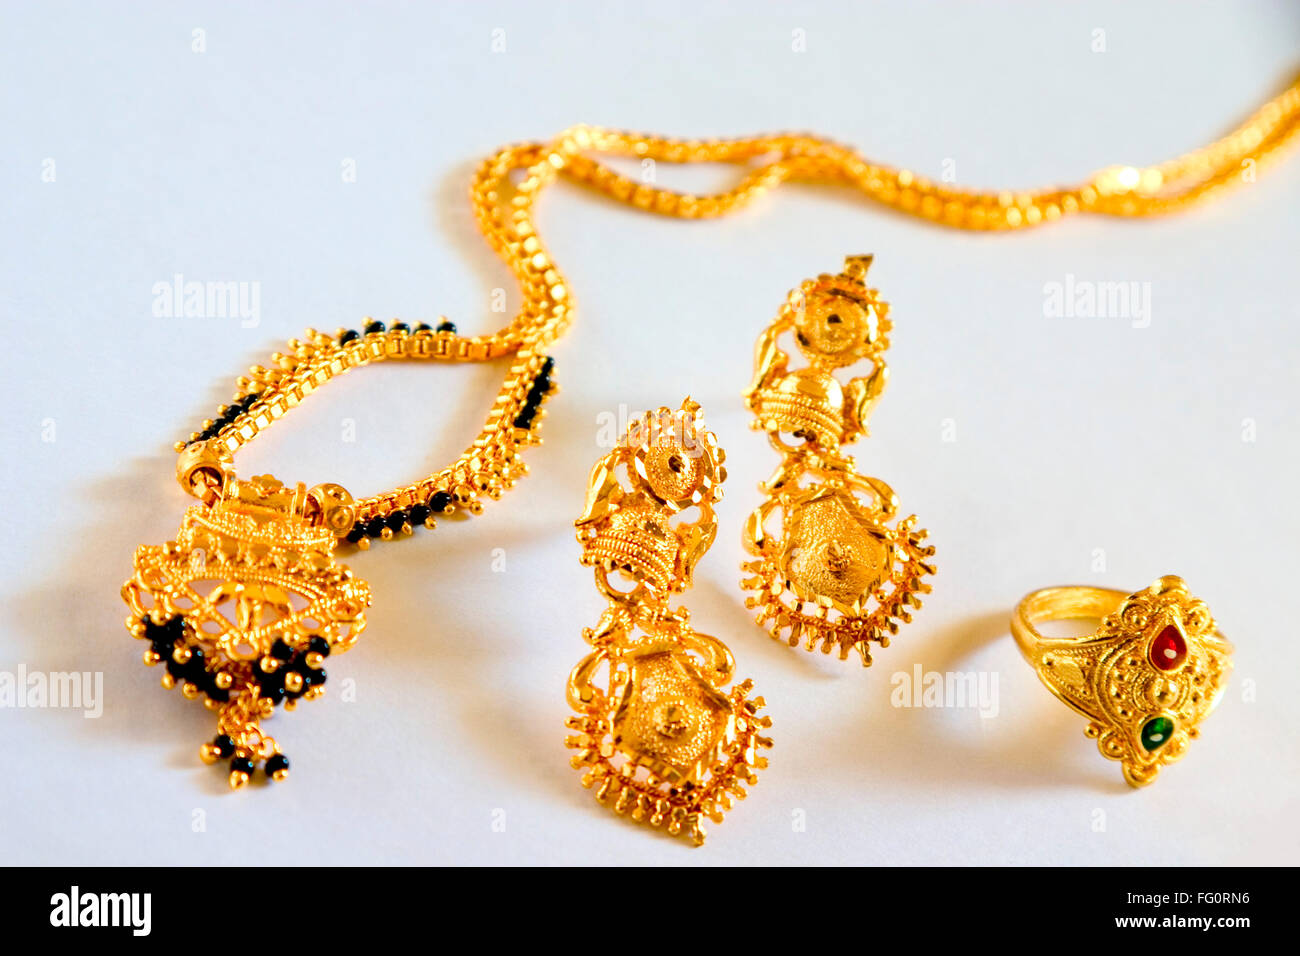 Mangalsutra Ring | RishiRich Jewels